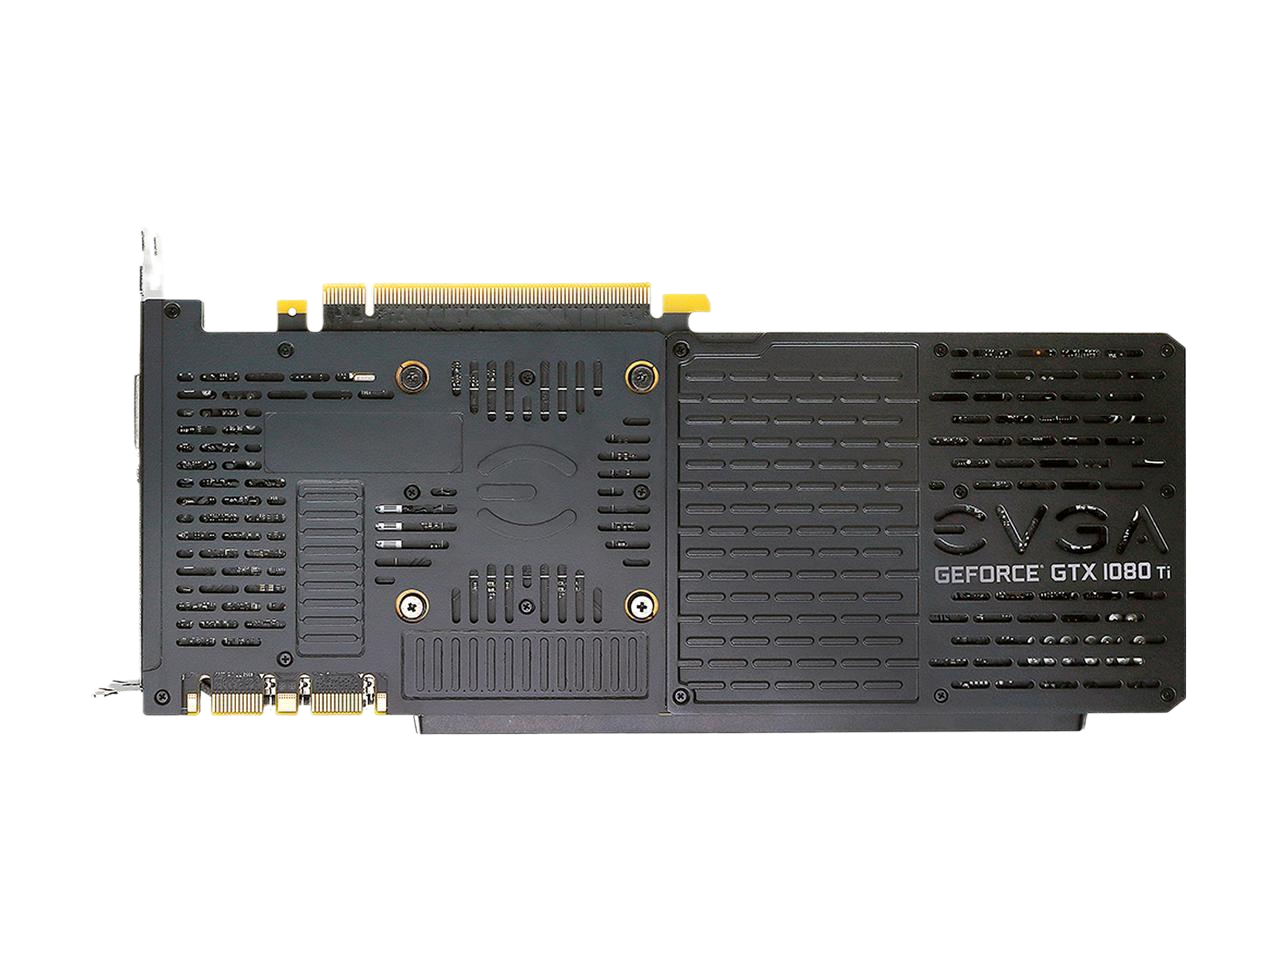 EVGA GeForce GTX 1080 Ti SC Black Edition GAMING 11GB GDDR5X iCX Cooler & LED Video Graphics Card 11G-P4-6393-KR